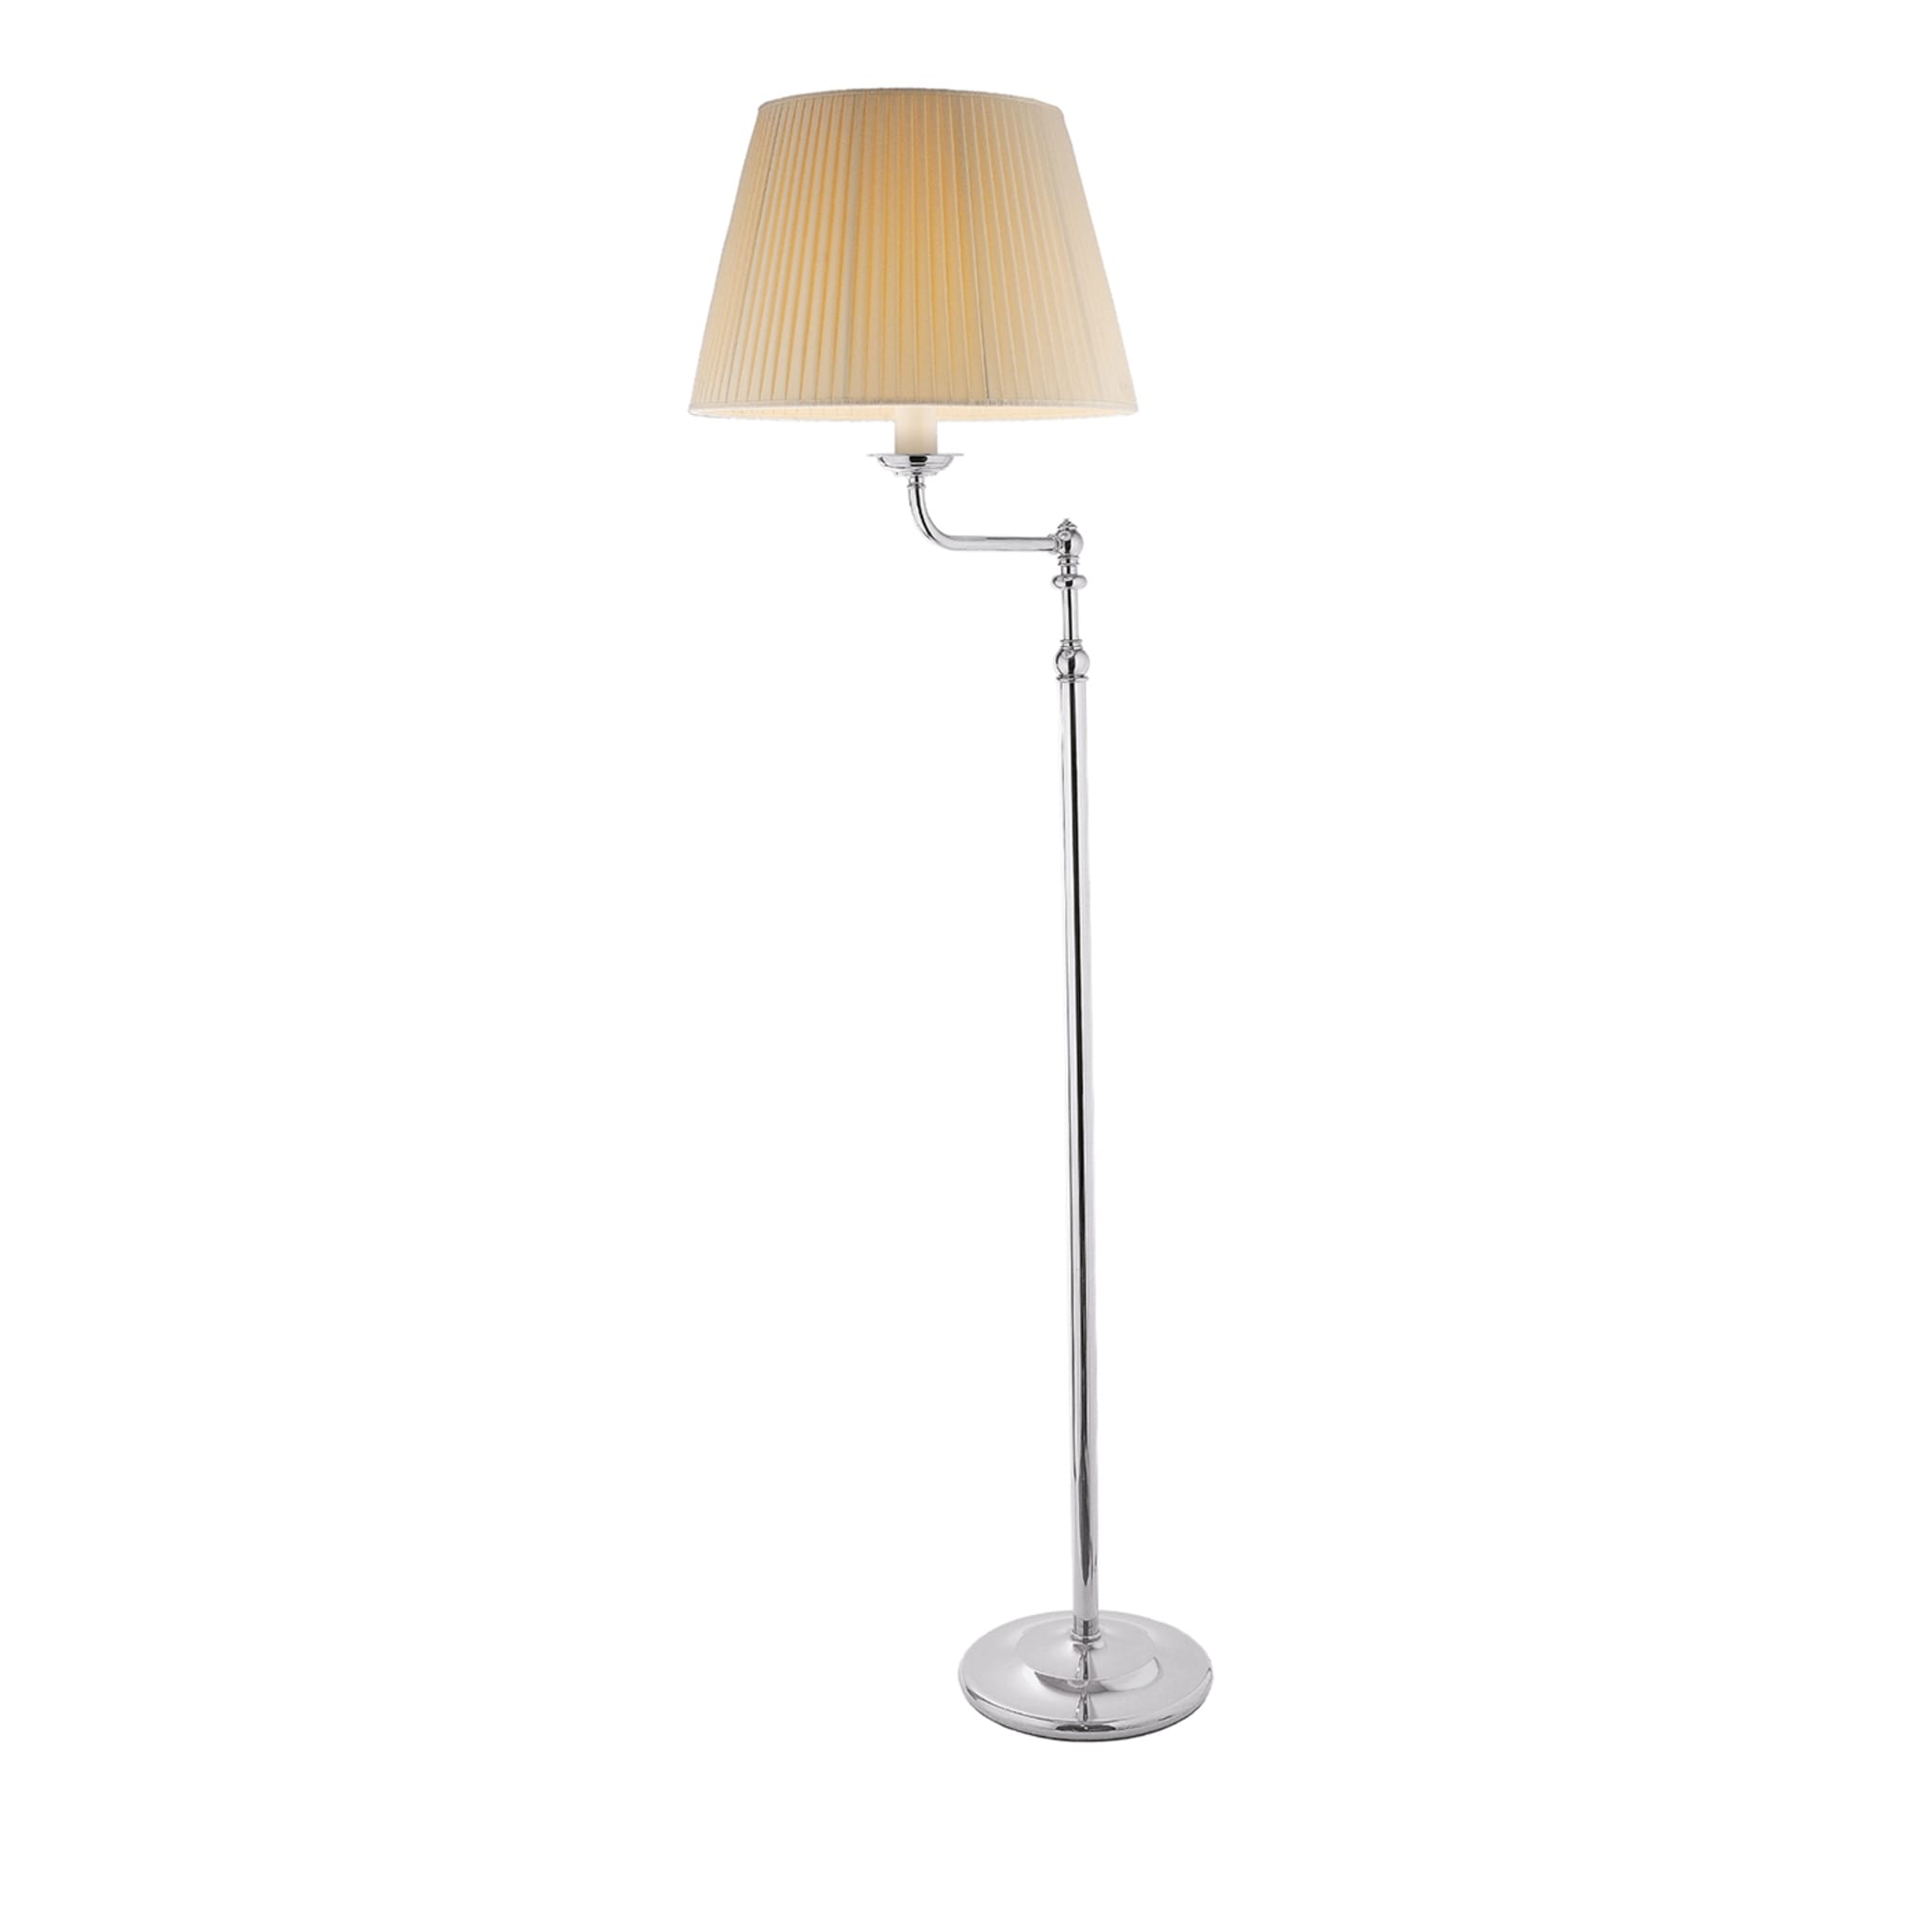 Nuguria 536 Floor Lamp by Michele Bönan - Main view